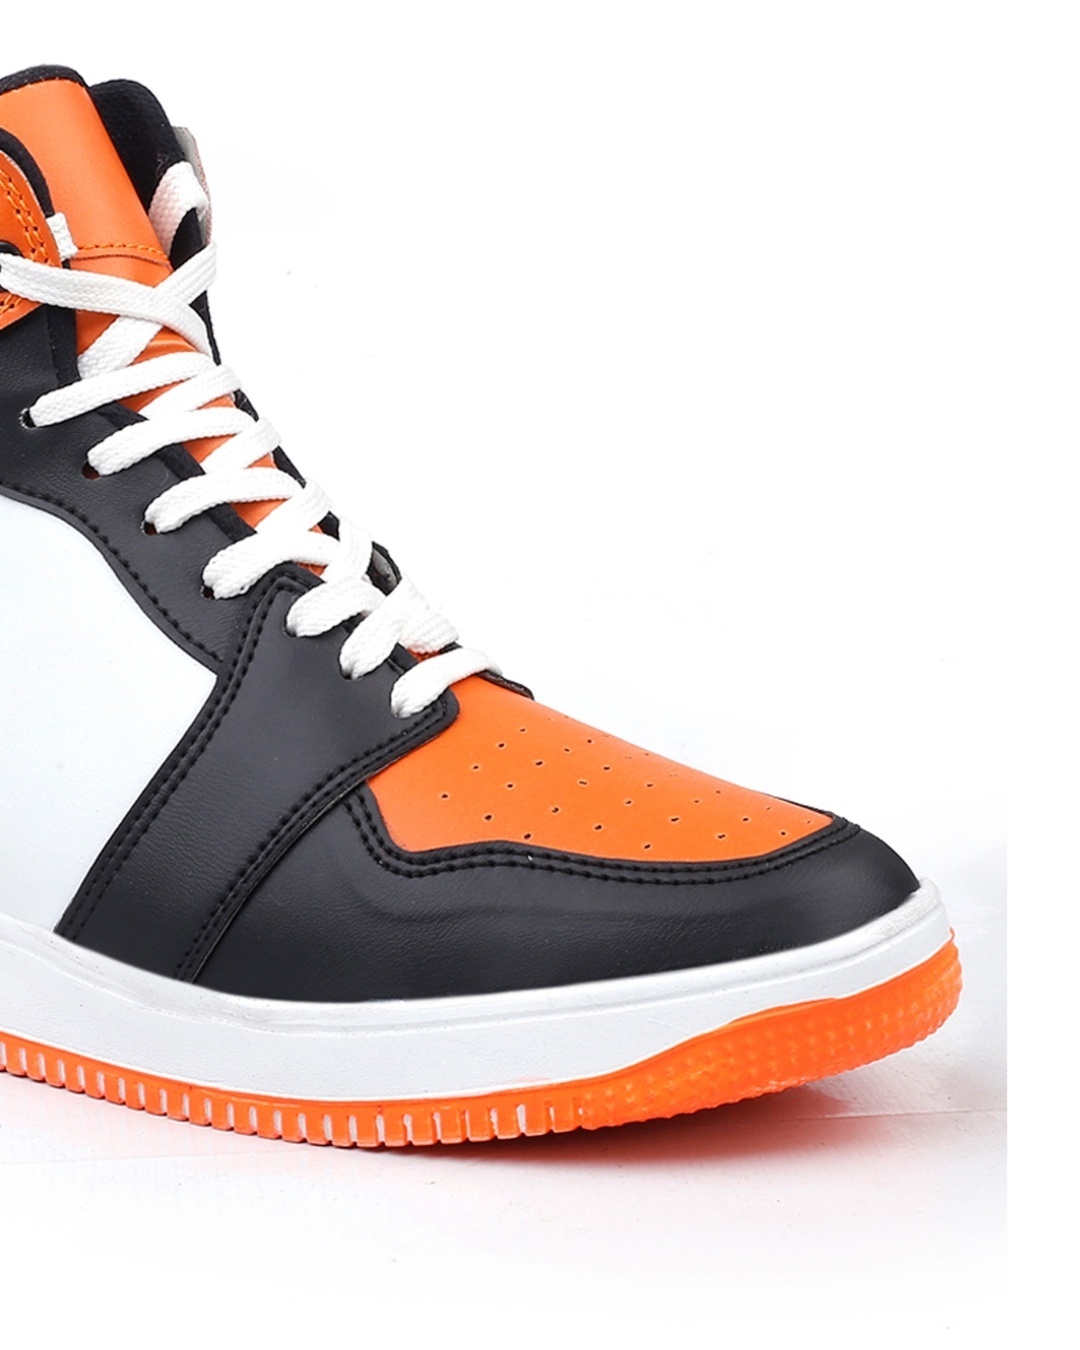 Shop Men's Orange and Black Color Block Sneakers